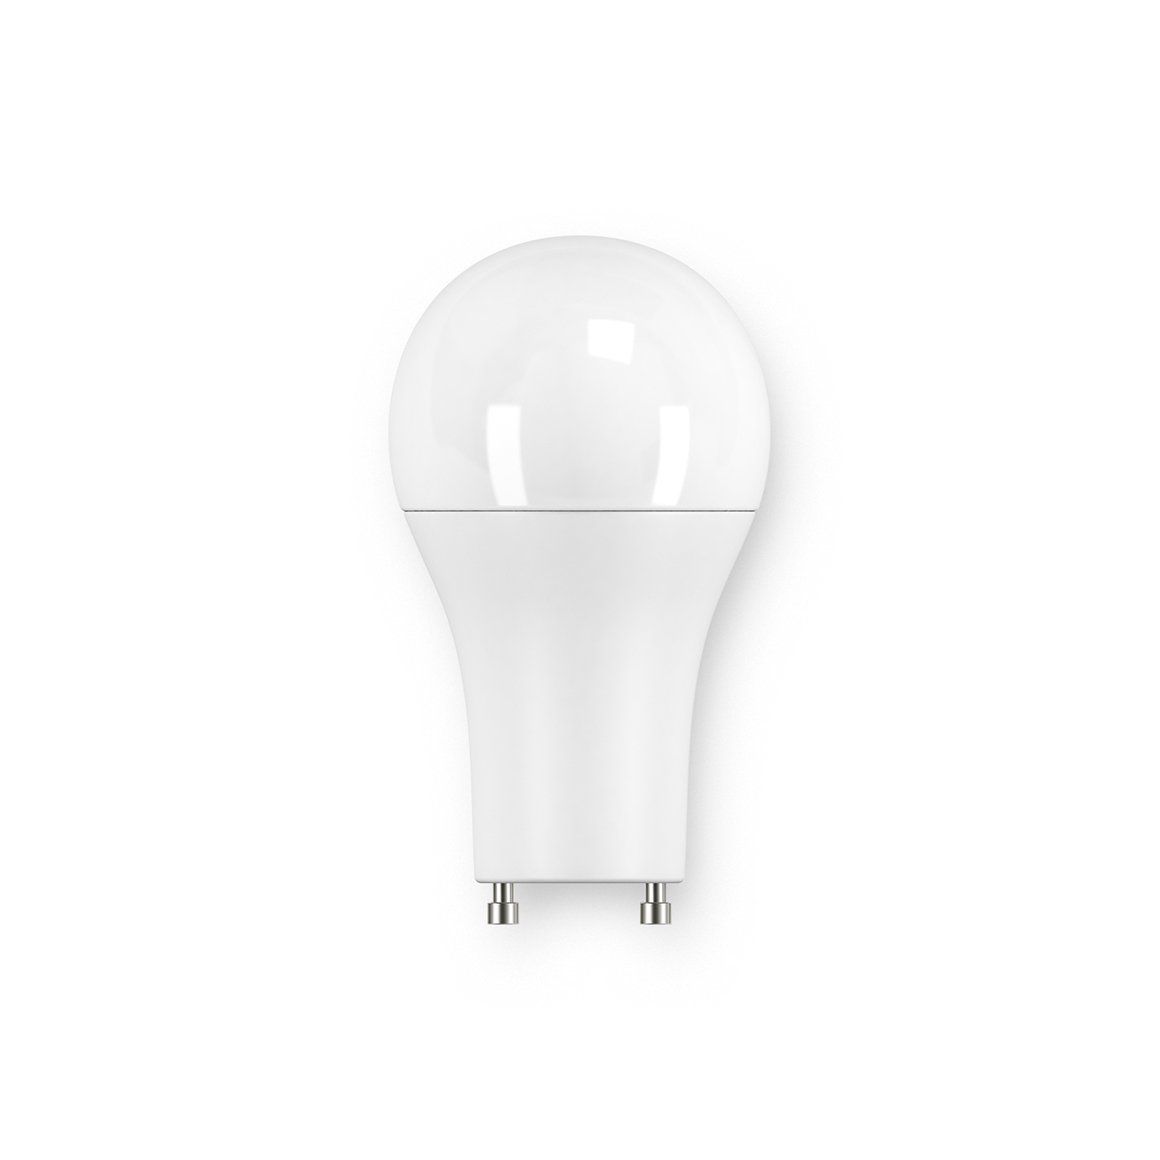 Leedarson smart bulb